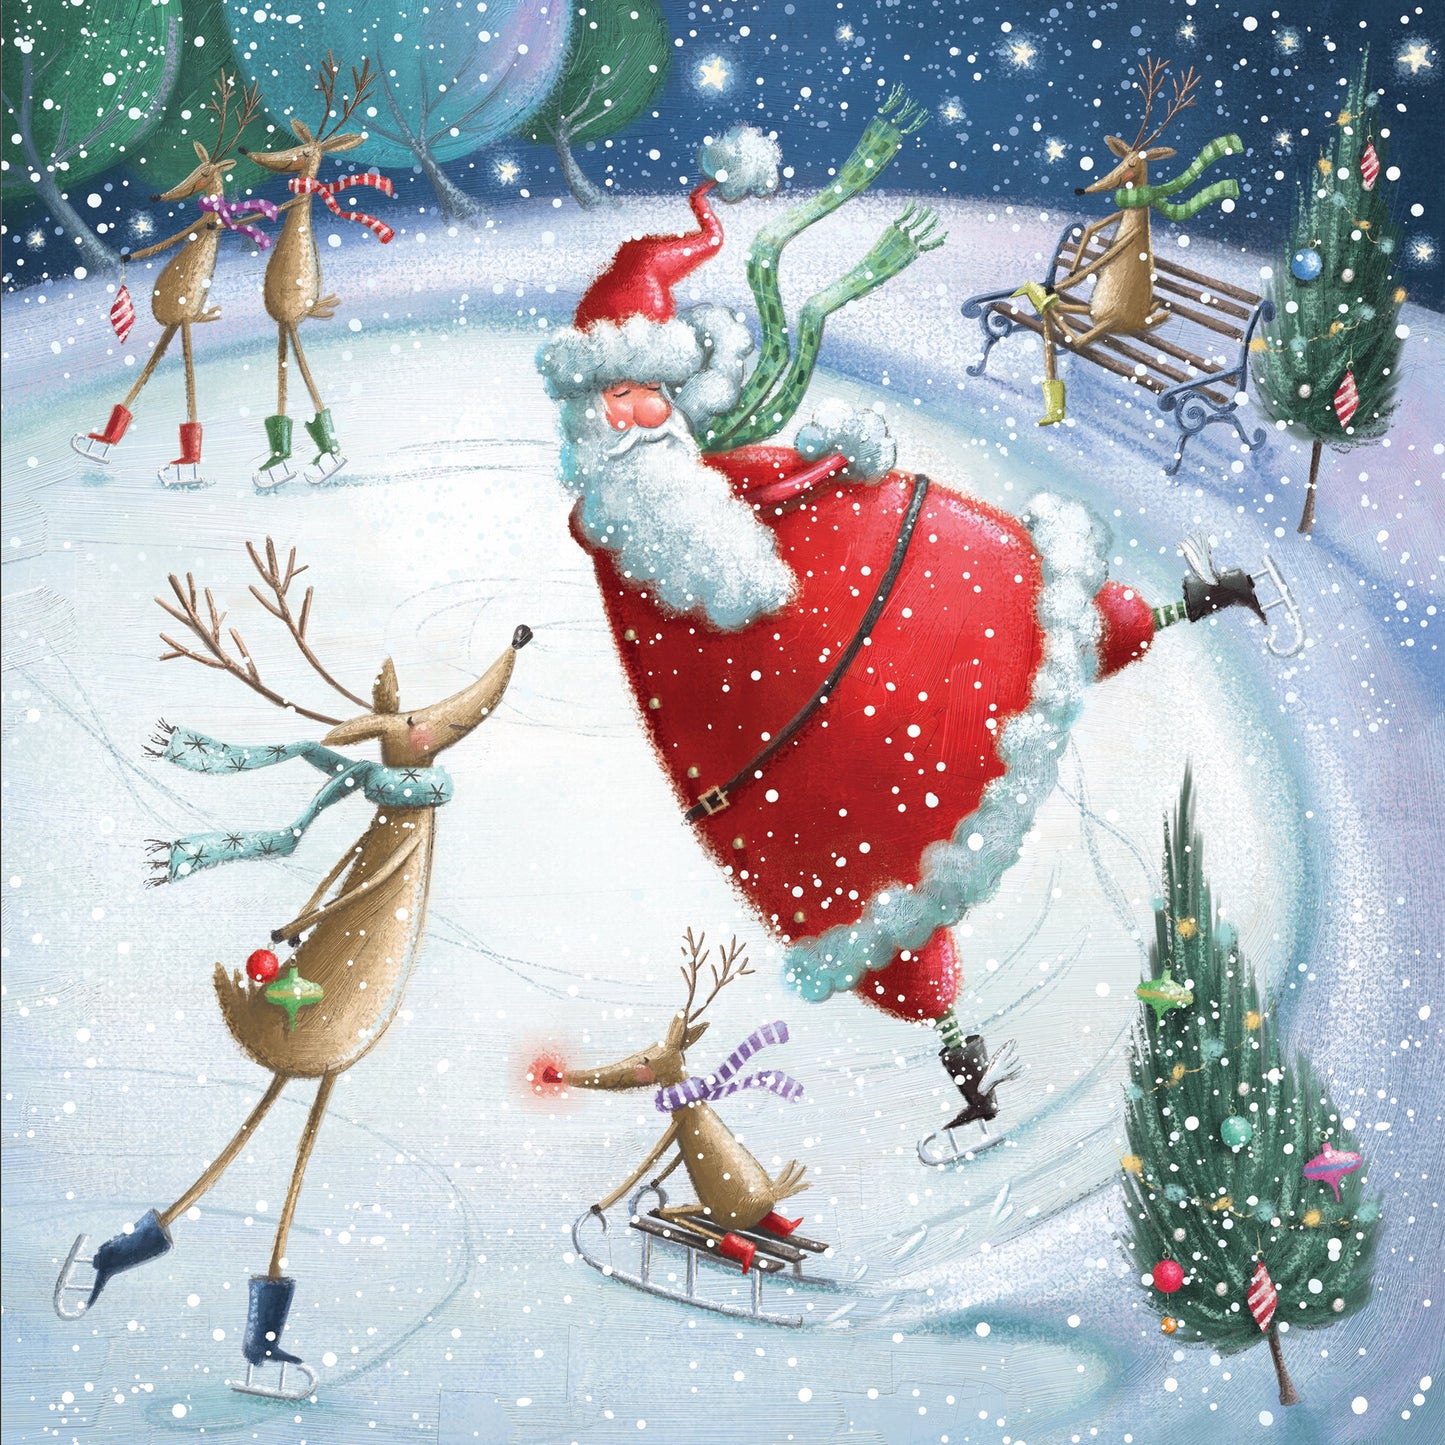 Santa, SVP Christmas Charity Cards